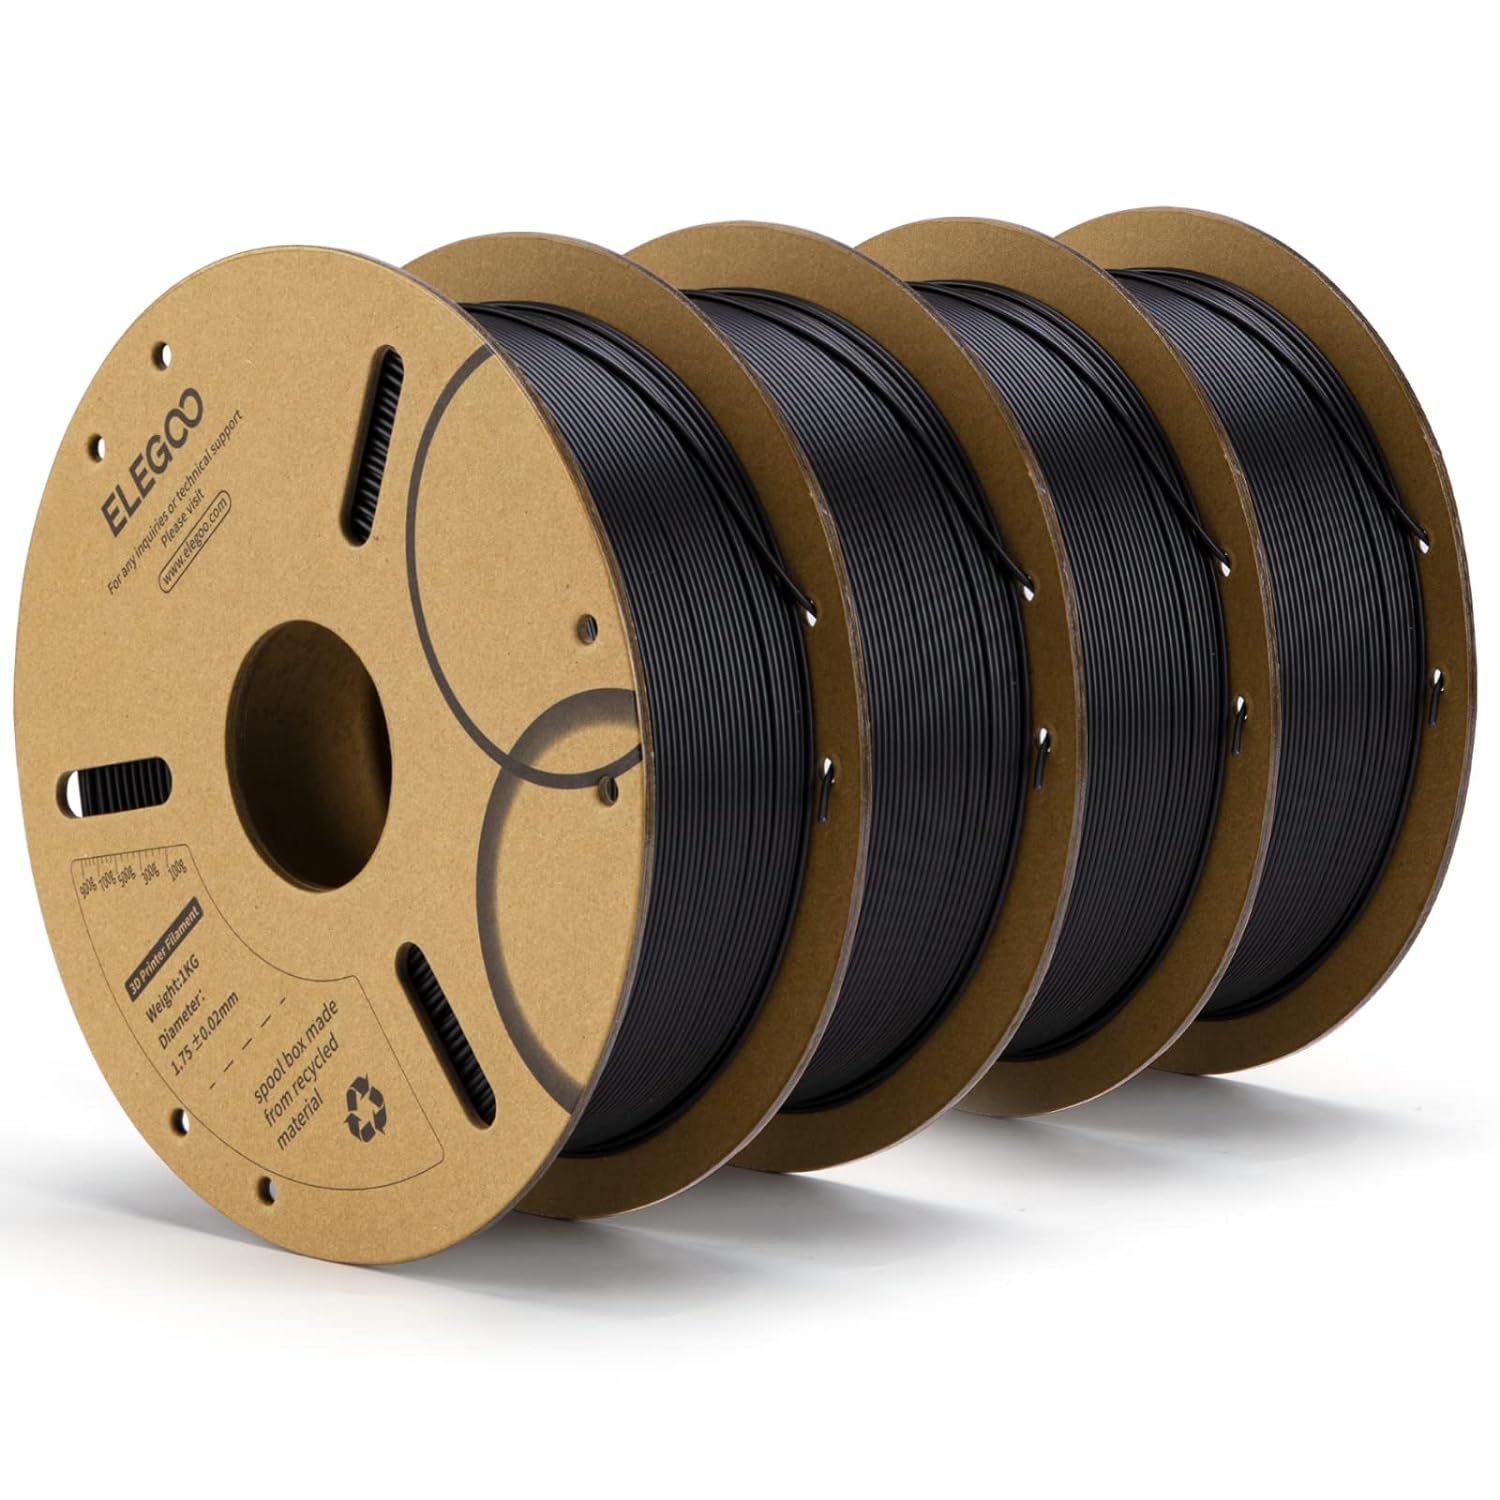 ELEGOO PLA Filament 1.75mm Bundle 4KG, Black & White 3D Printer Filament  Bulk Dimensional Accuracy +/- 0.02mm, 4 Pack 1kg Cardboard Spool(2.2lbs)  Fits